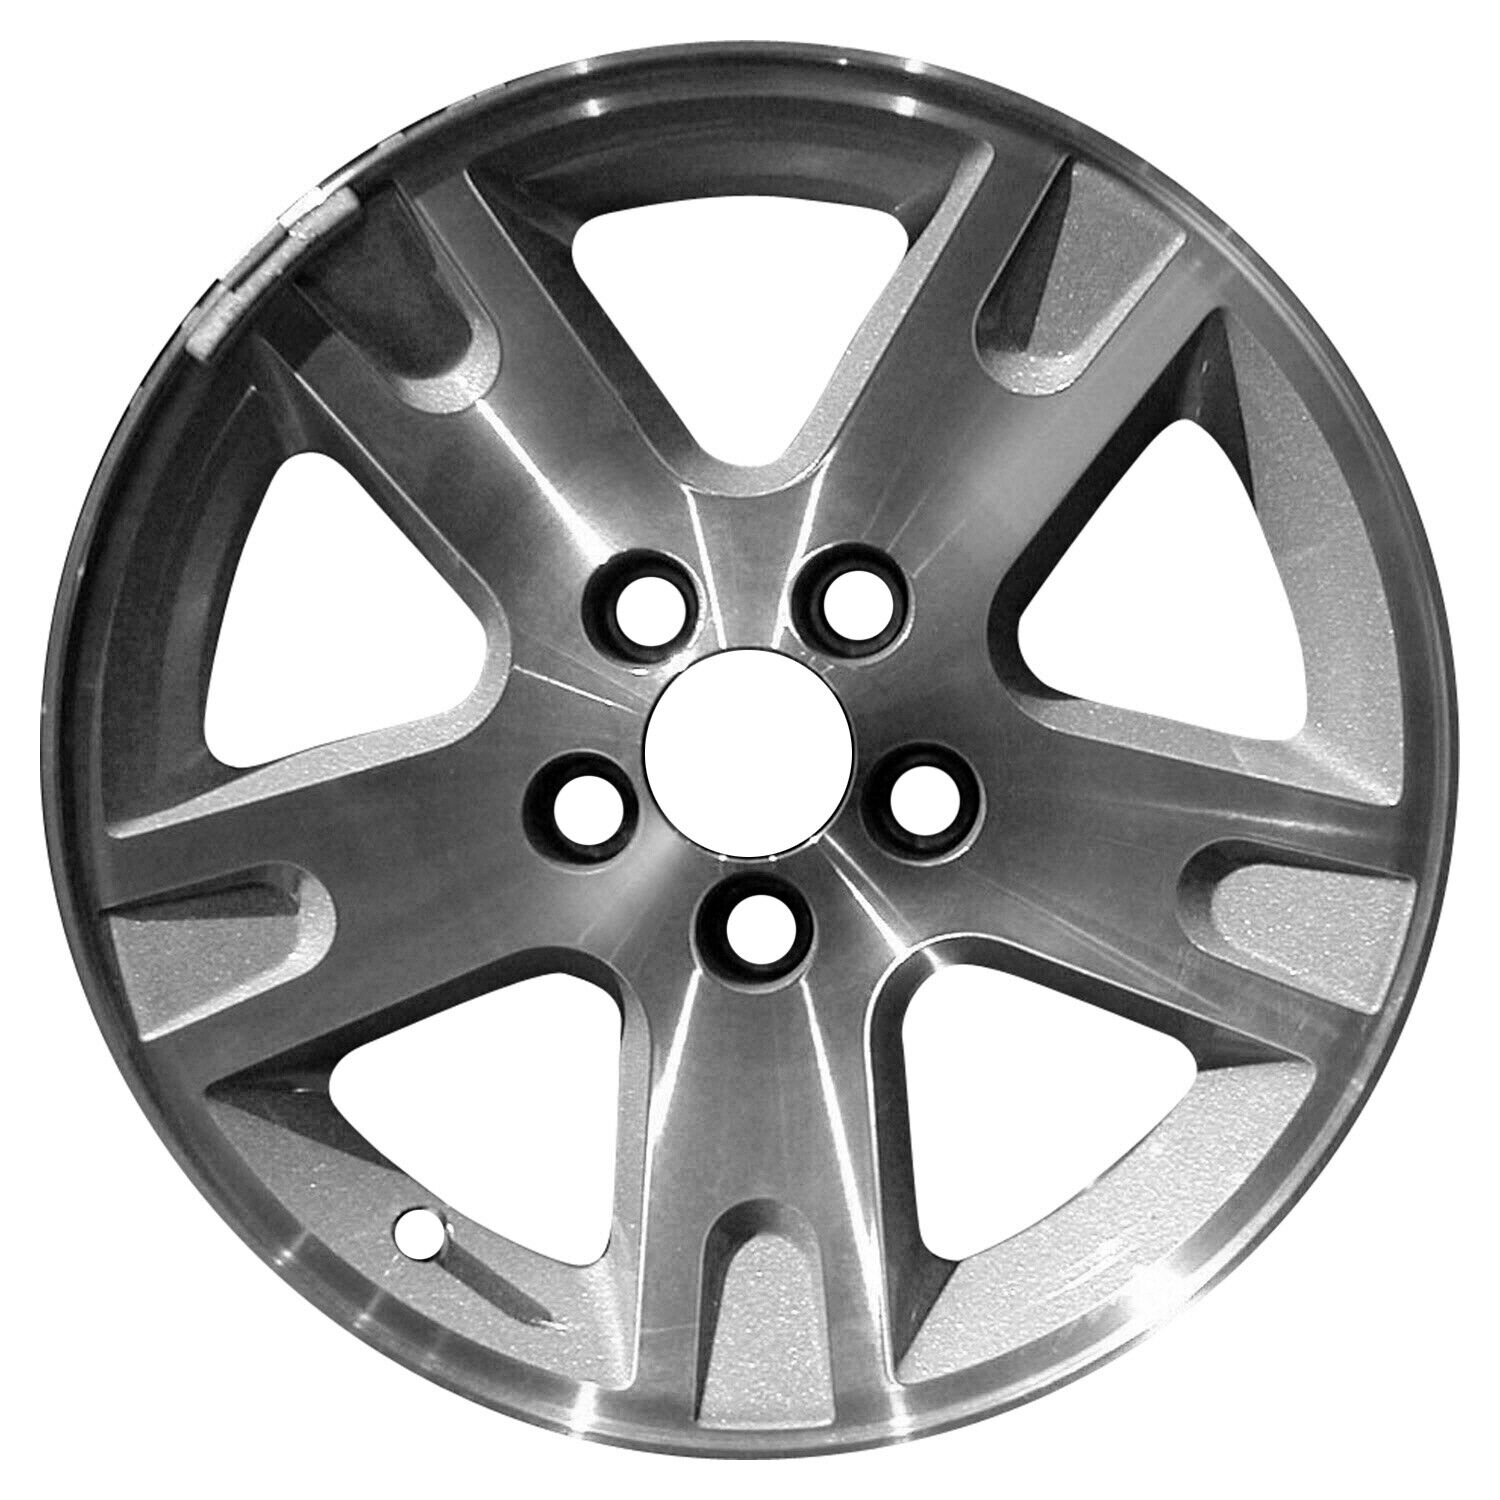 03463 OEM Used Aluminum Wheel 16x7 Fits 2002-2011 Ford Ranger